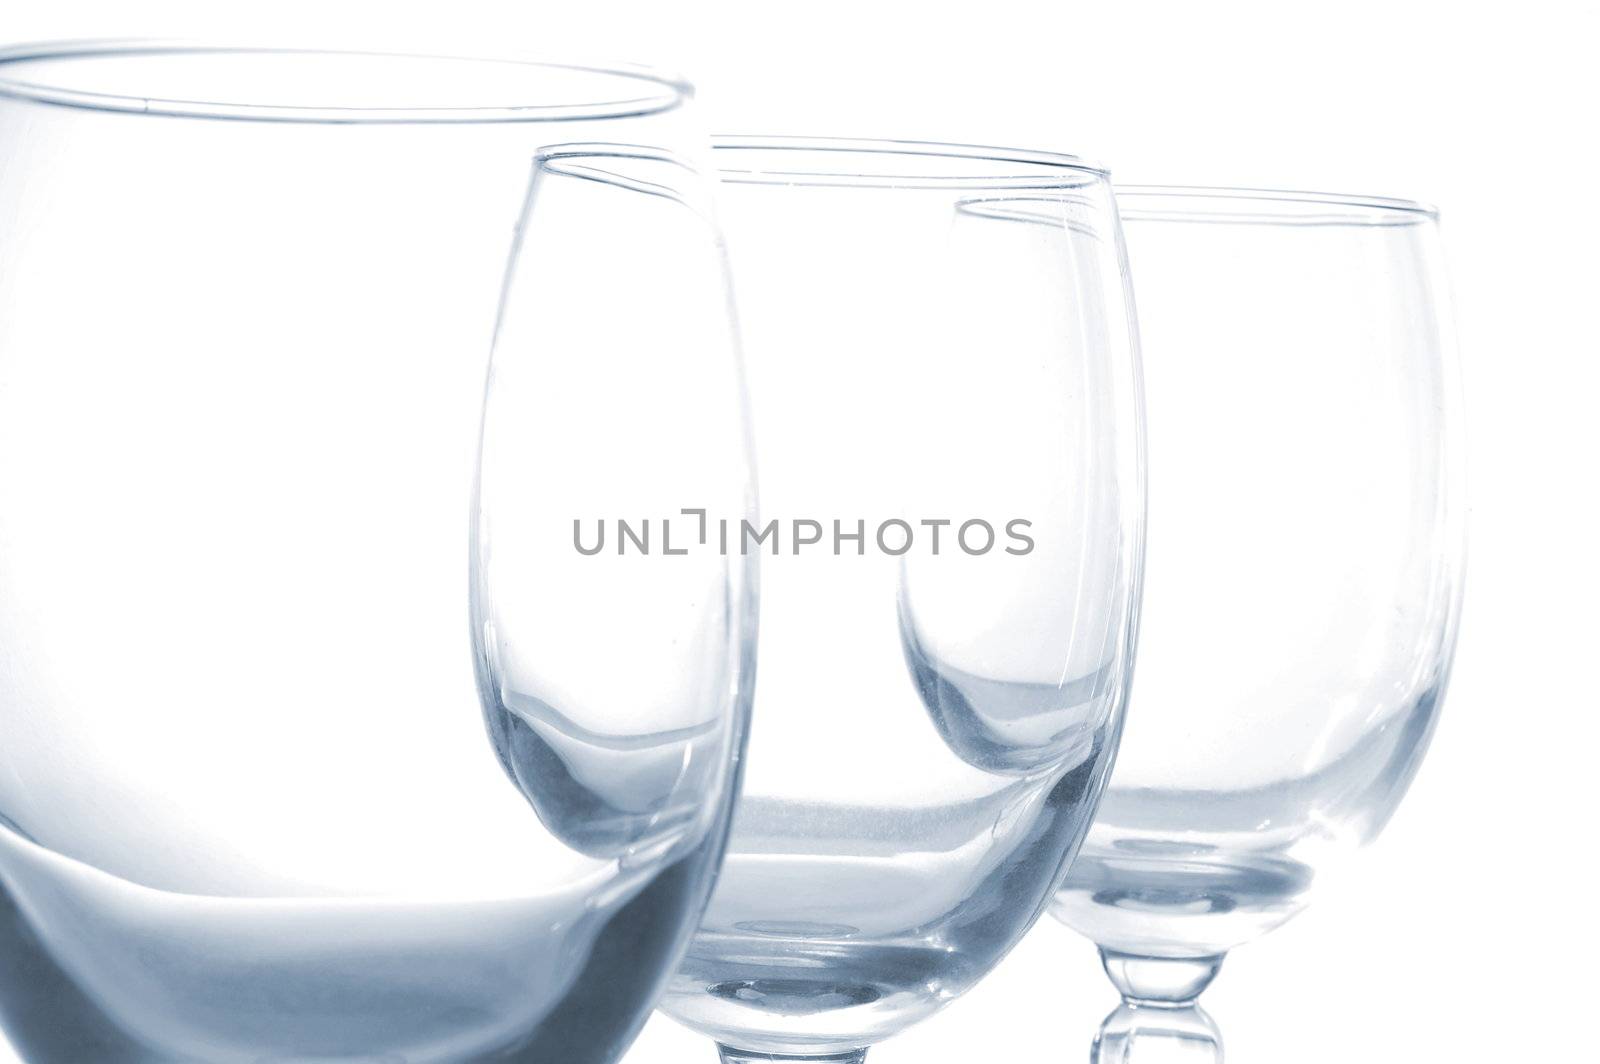 vine glasses by gunnar3000